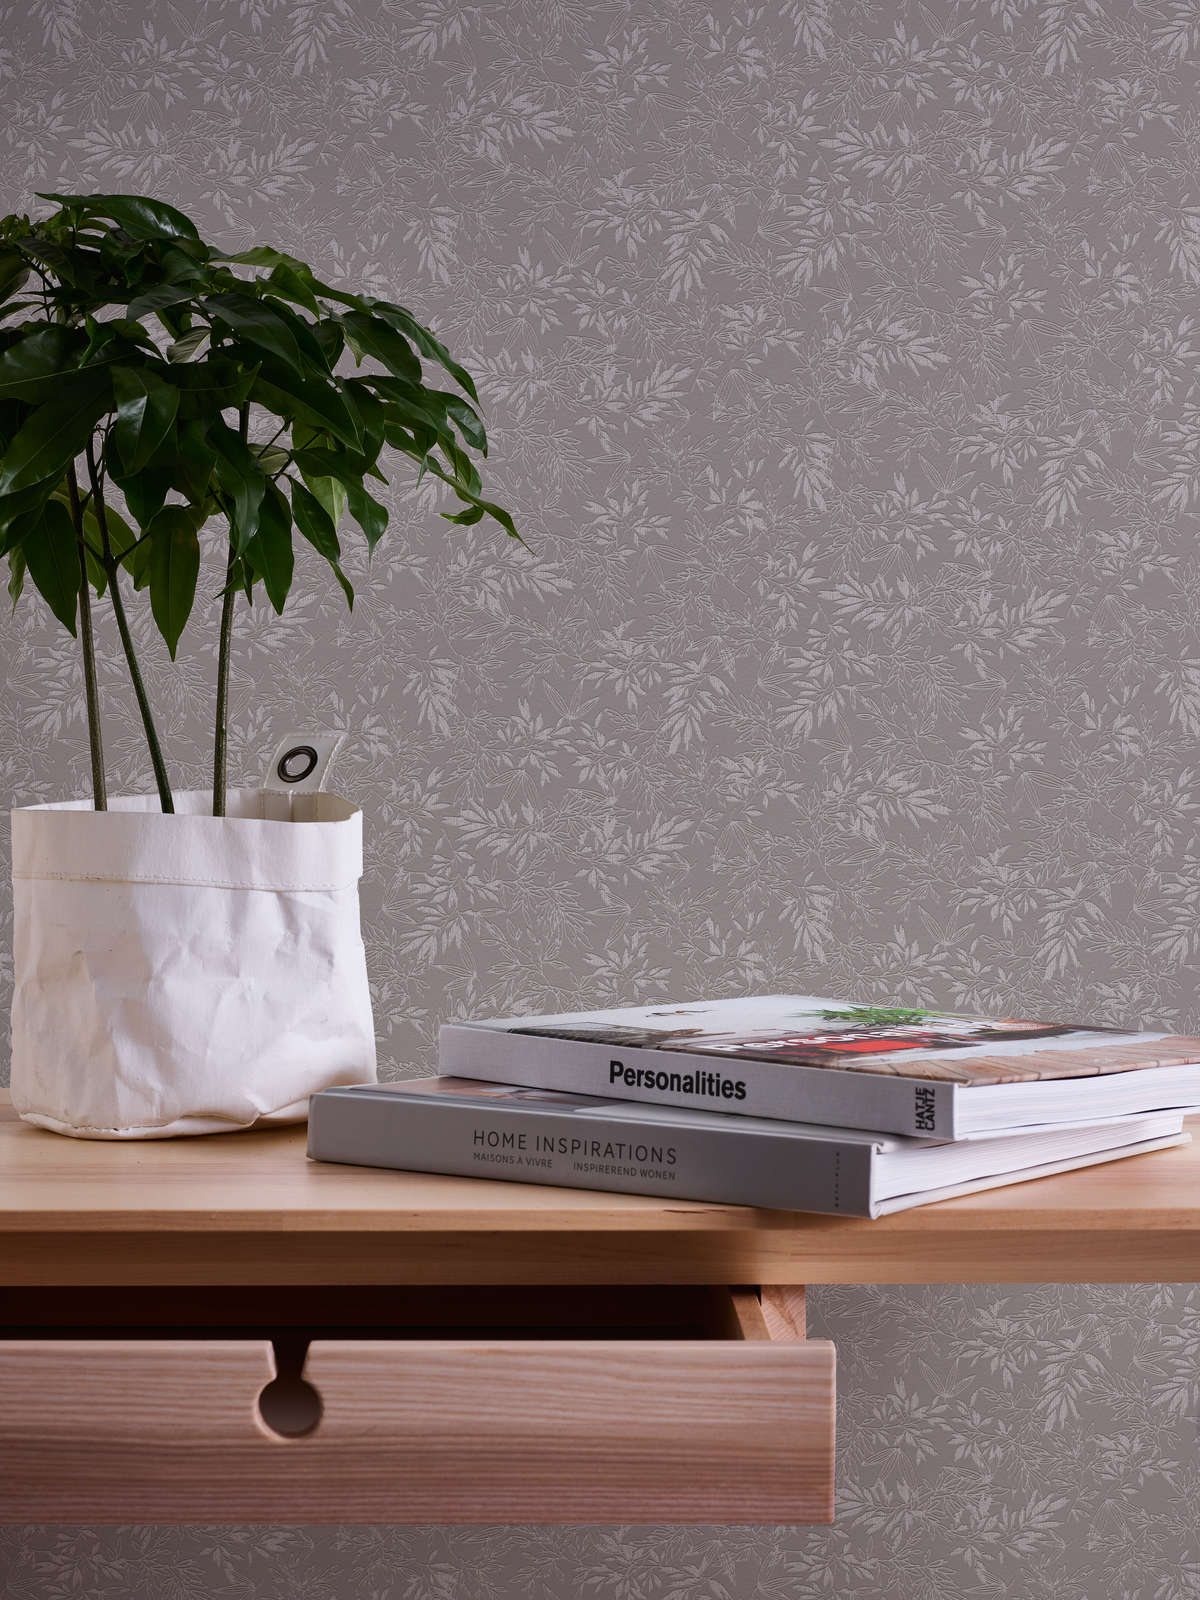             Leaves wallpaper with foam structure in matt - grey, light grey
        